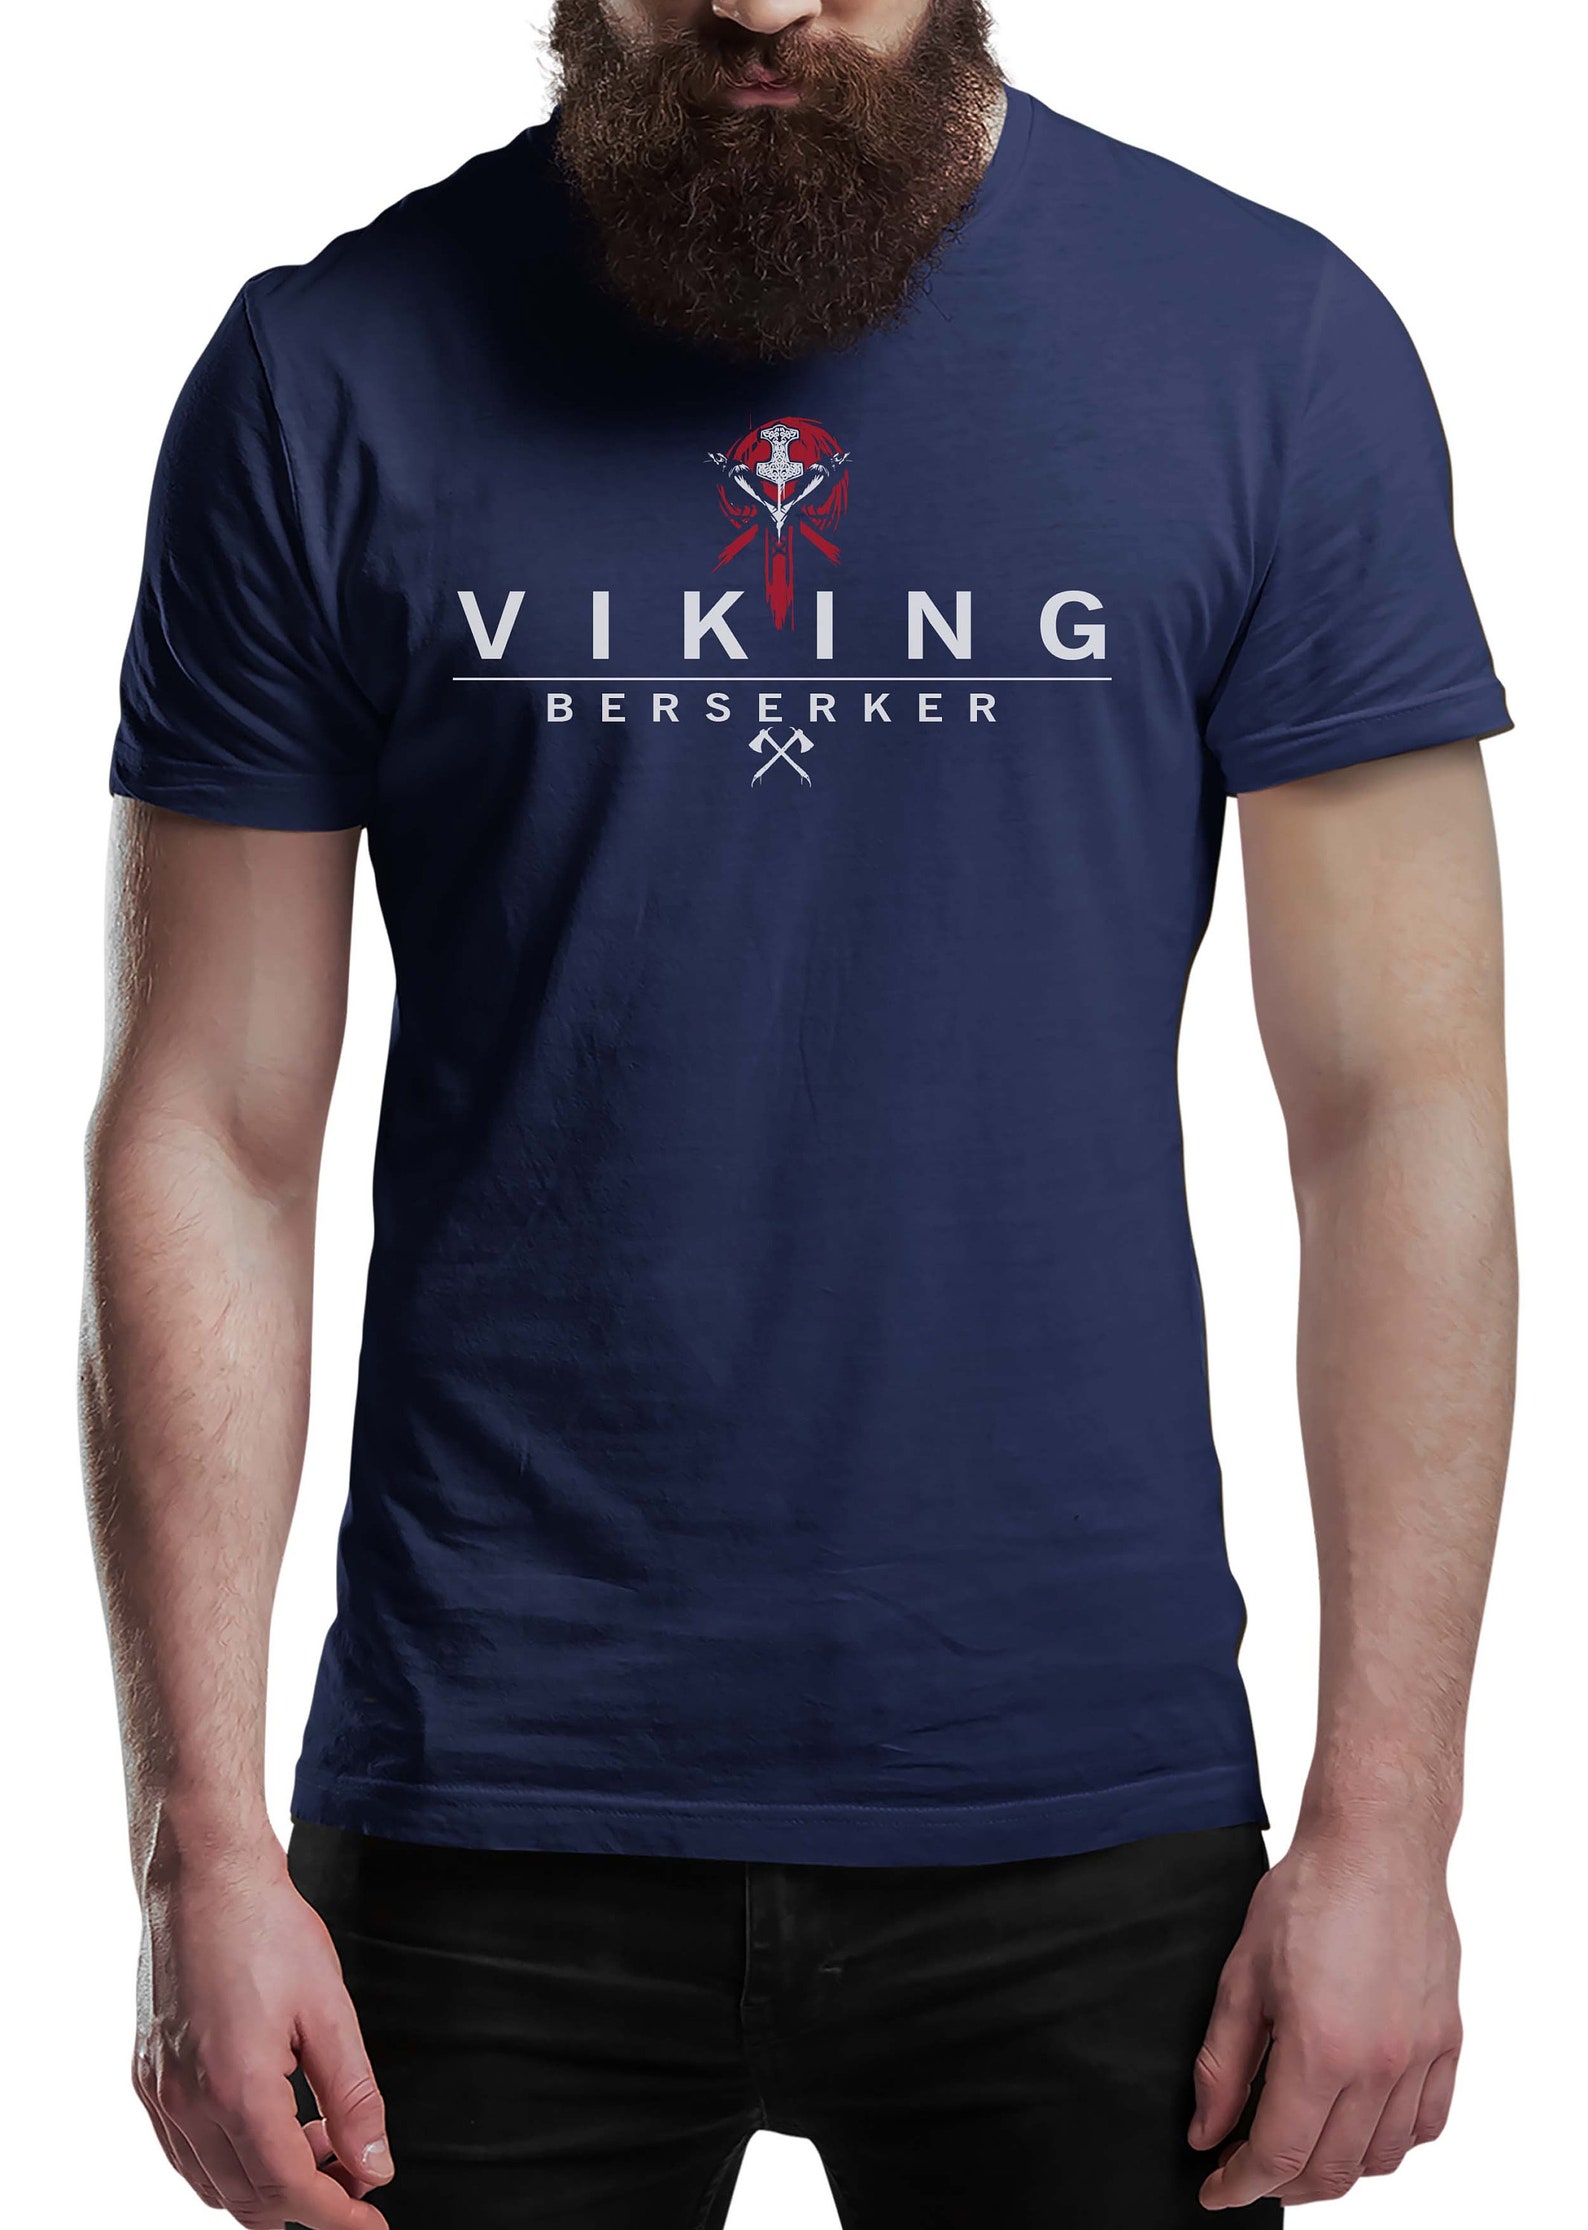 Viking Berserker T-Shirt Valhalla Tee Shirt Norway Norse | Etsy